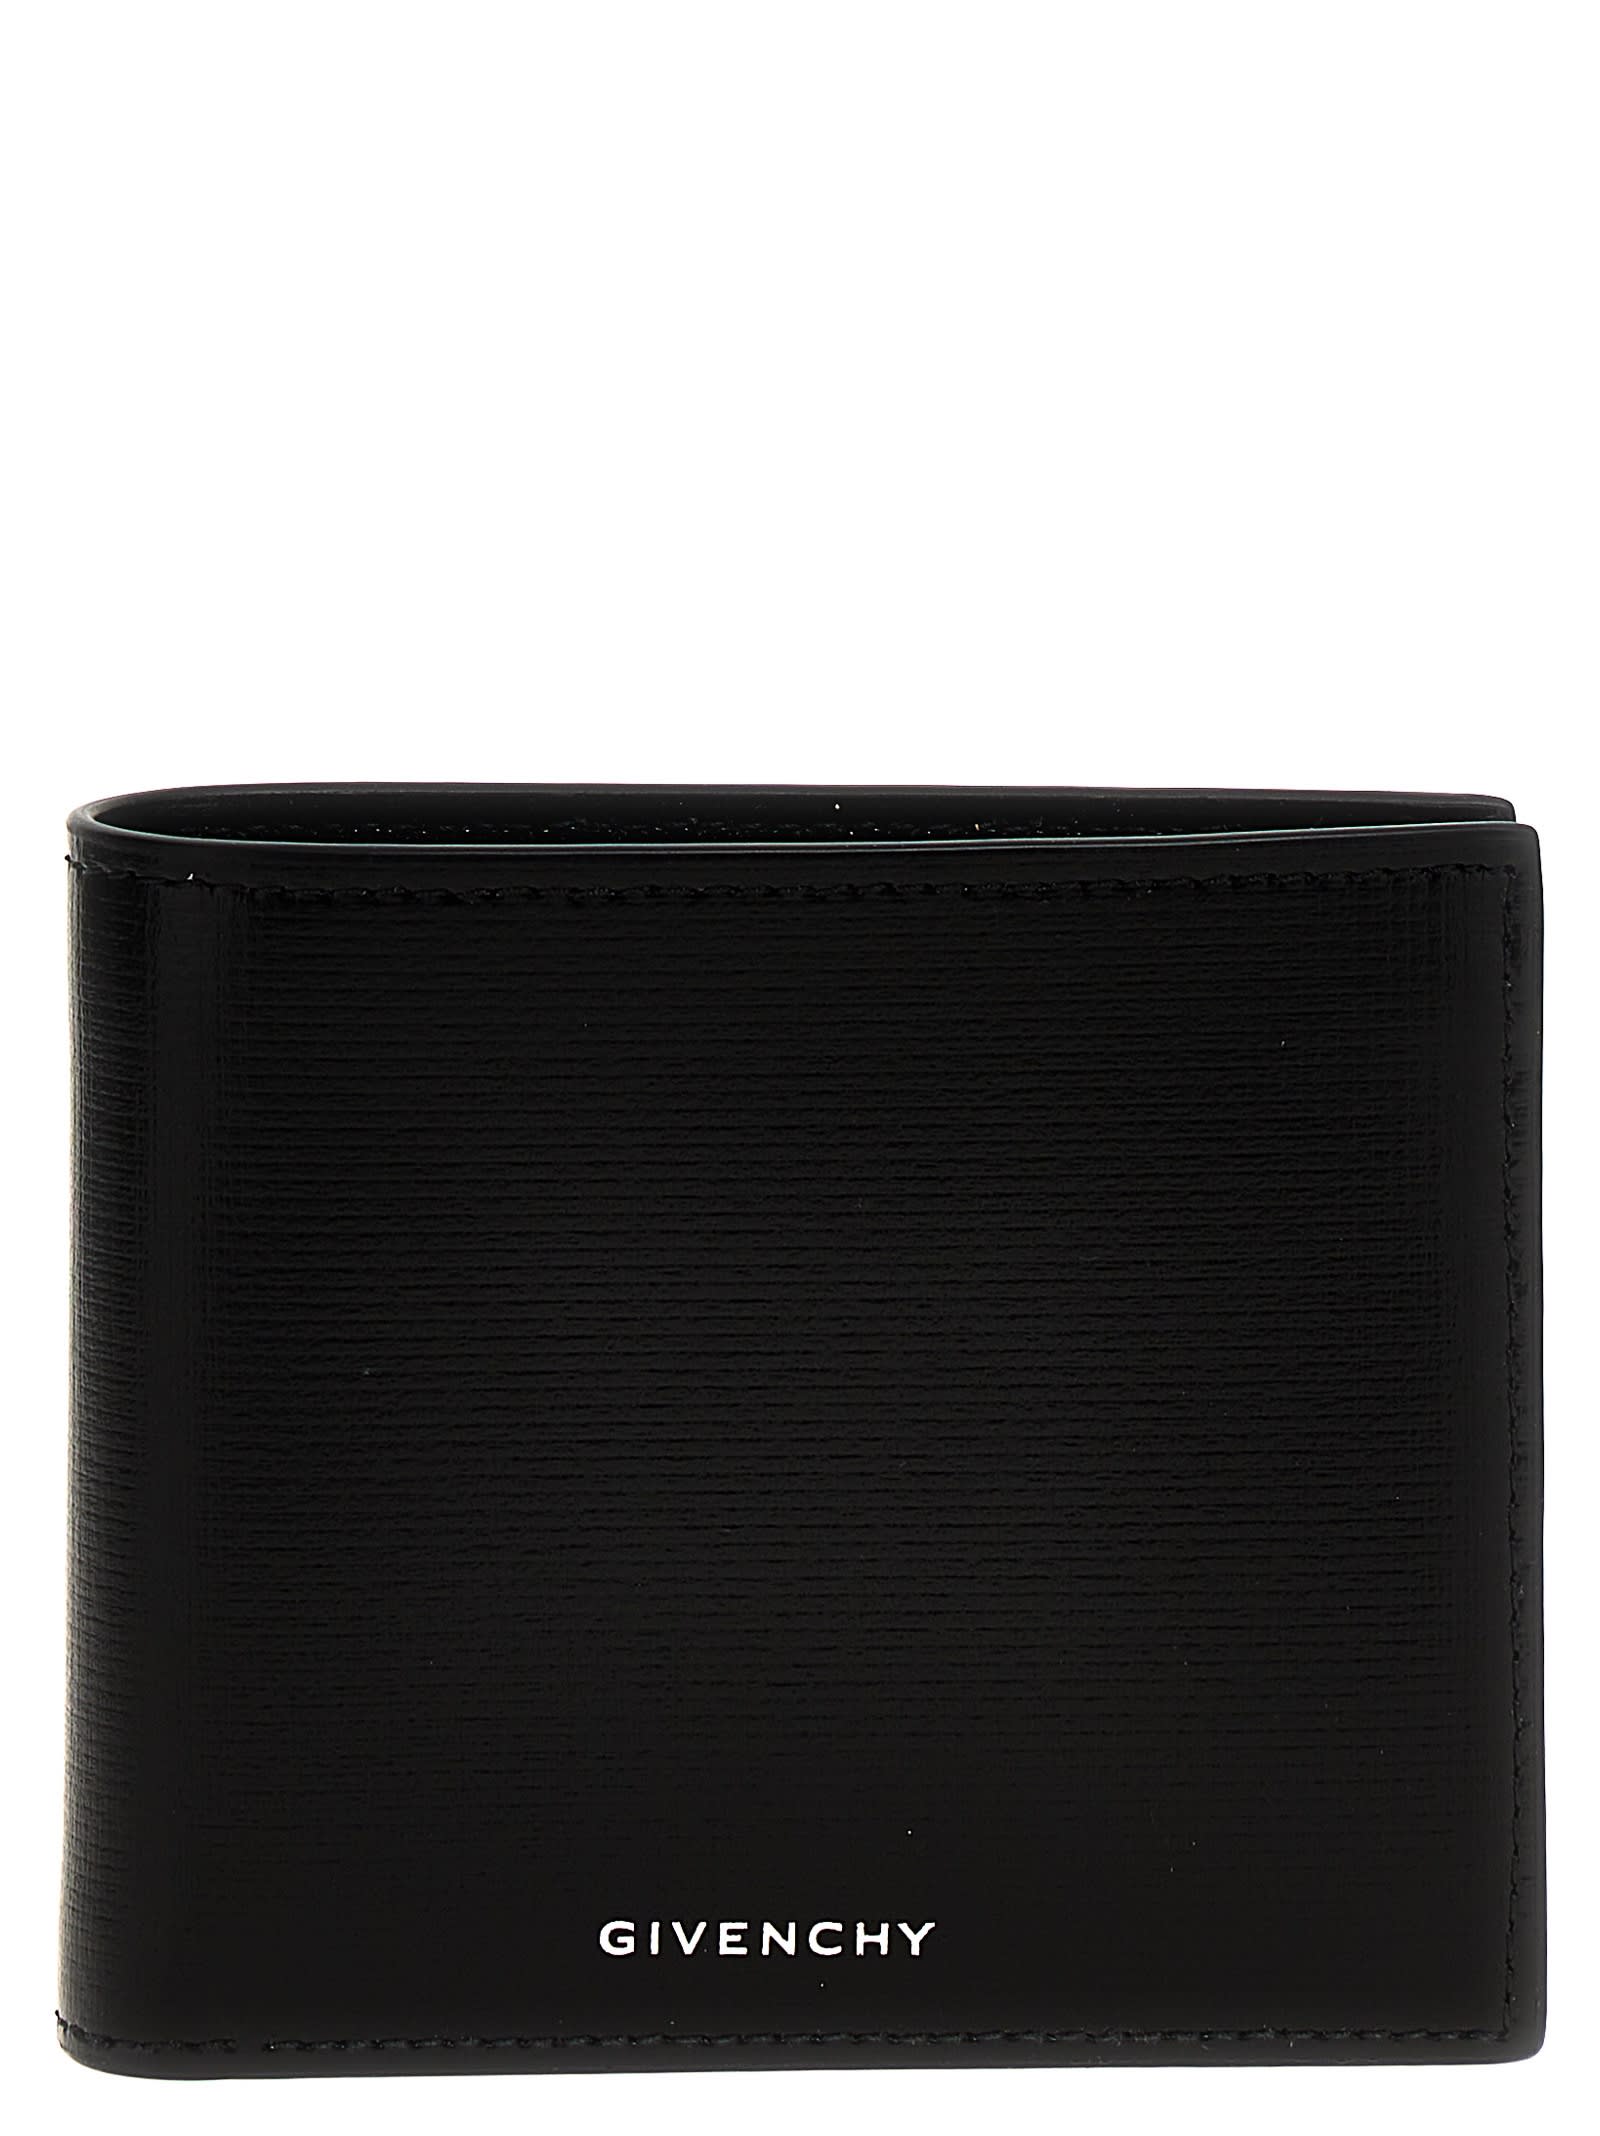 Givenchy Logo Wallet In Black